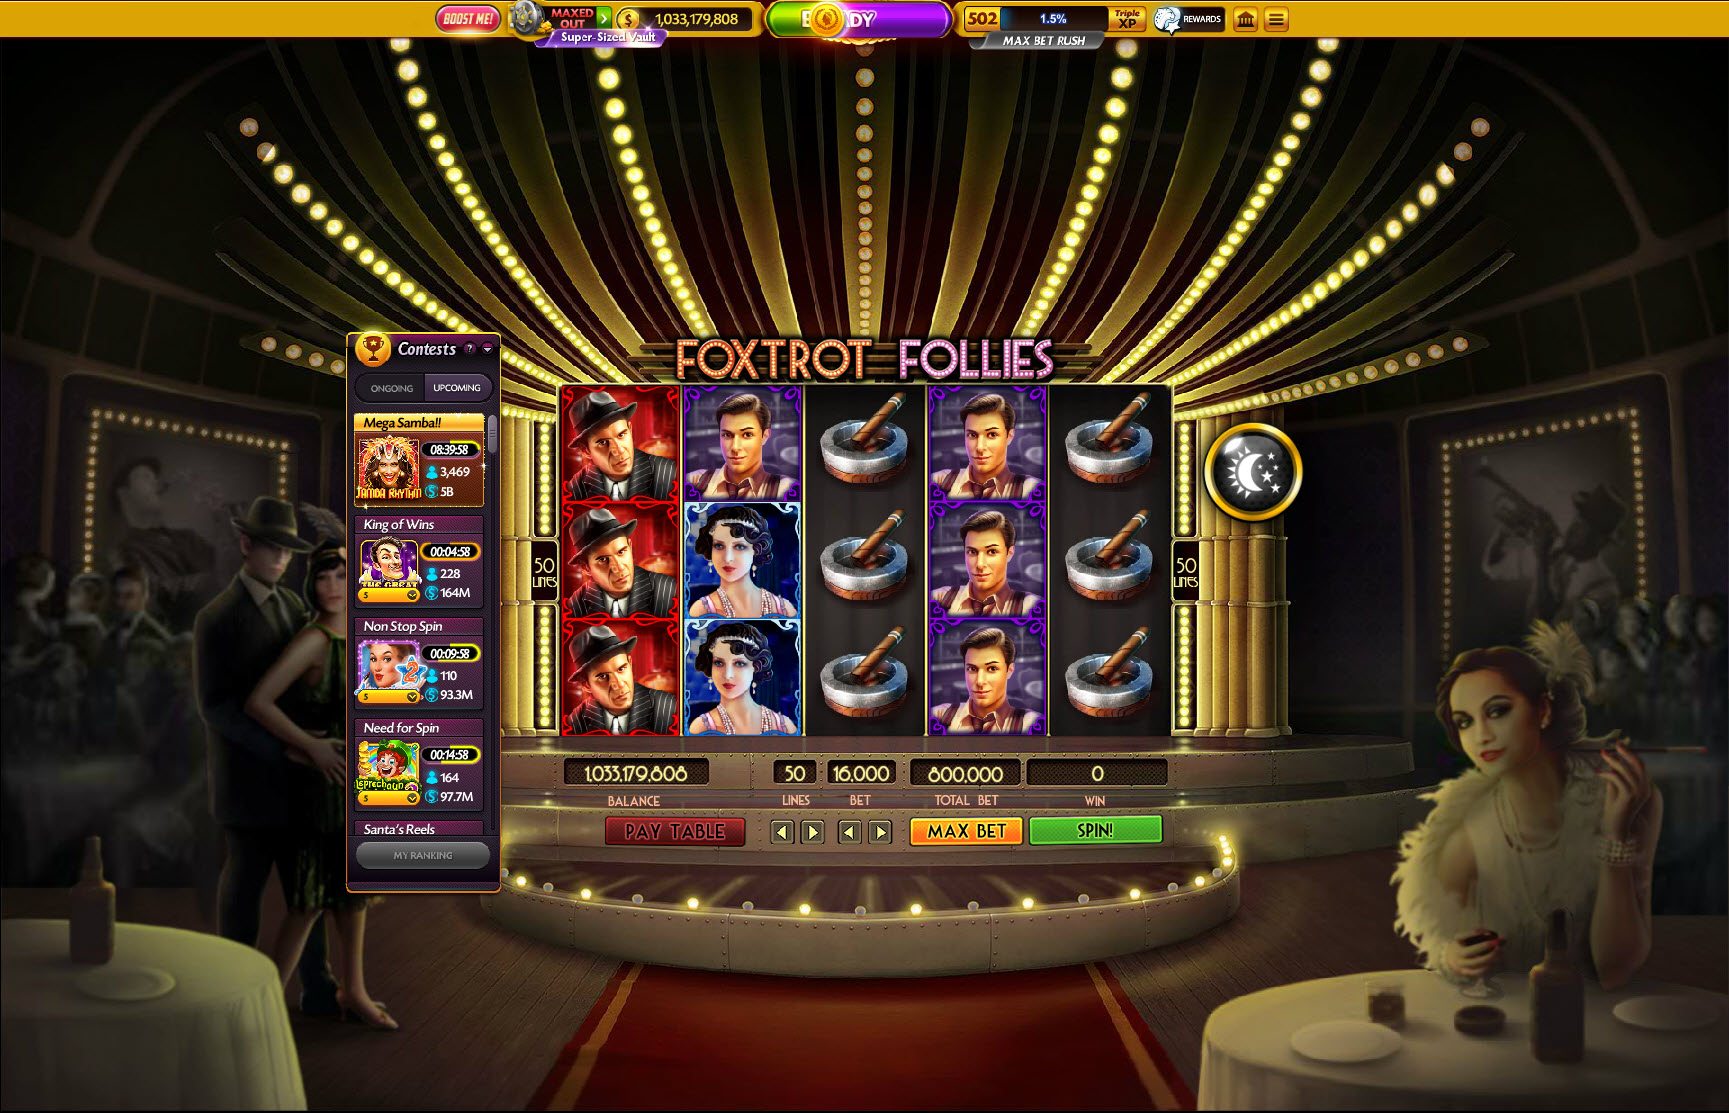 How to pick a winning slot machine